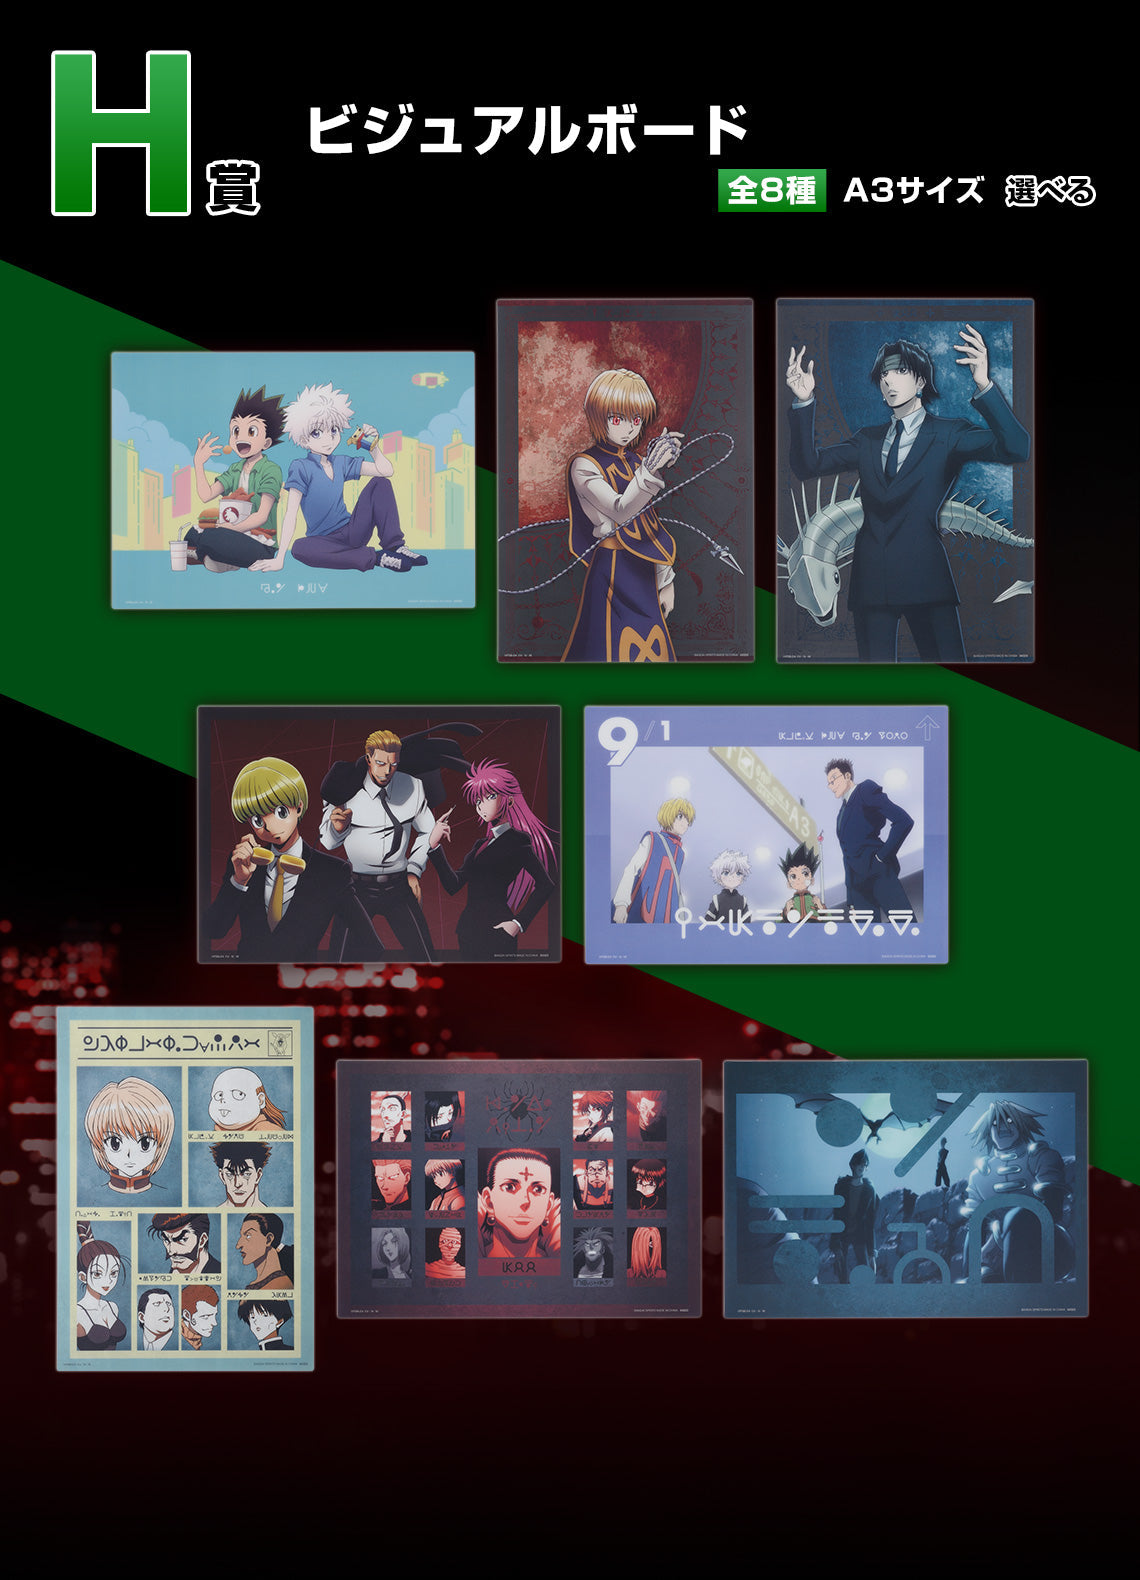 Ichiban Kuji Hunter x Hunter Revenge Of Scarlet-Bandai-Ace Cards &amp; Collectibles